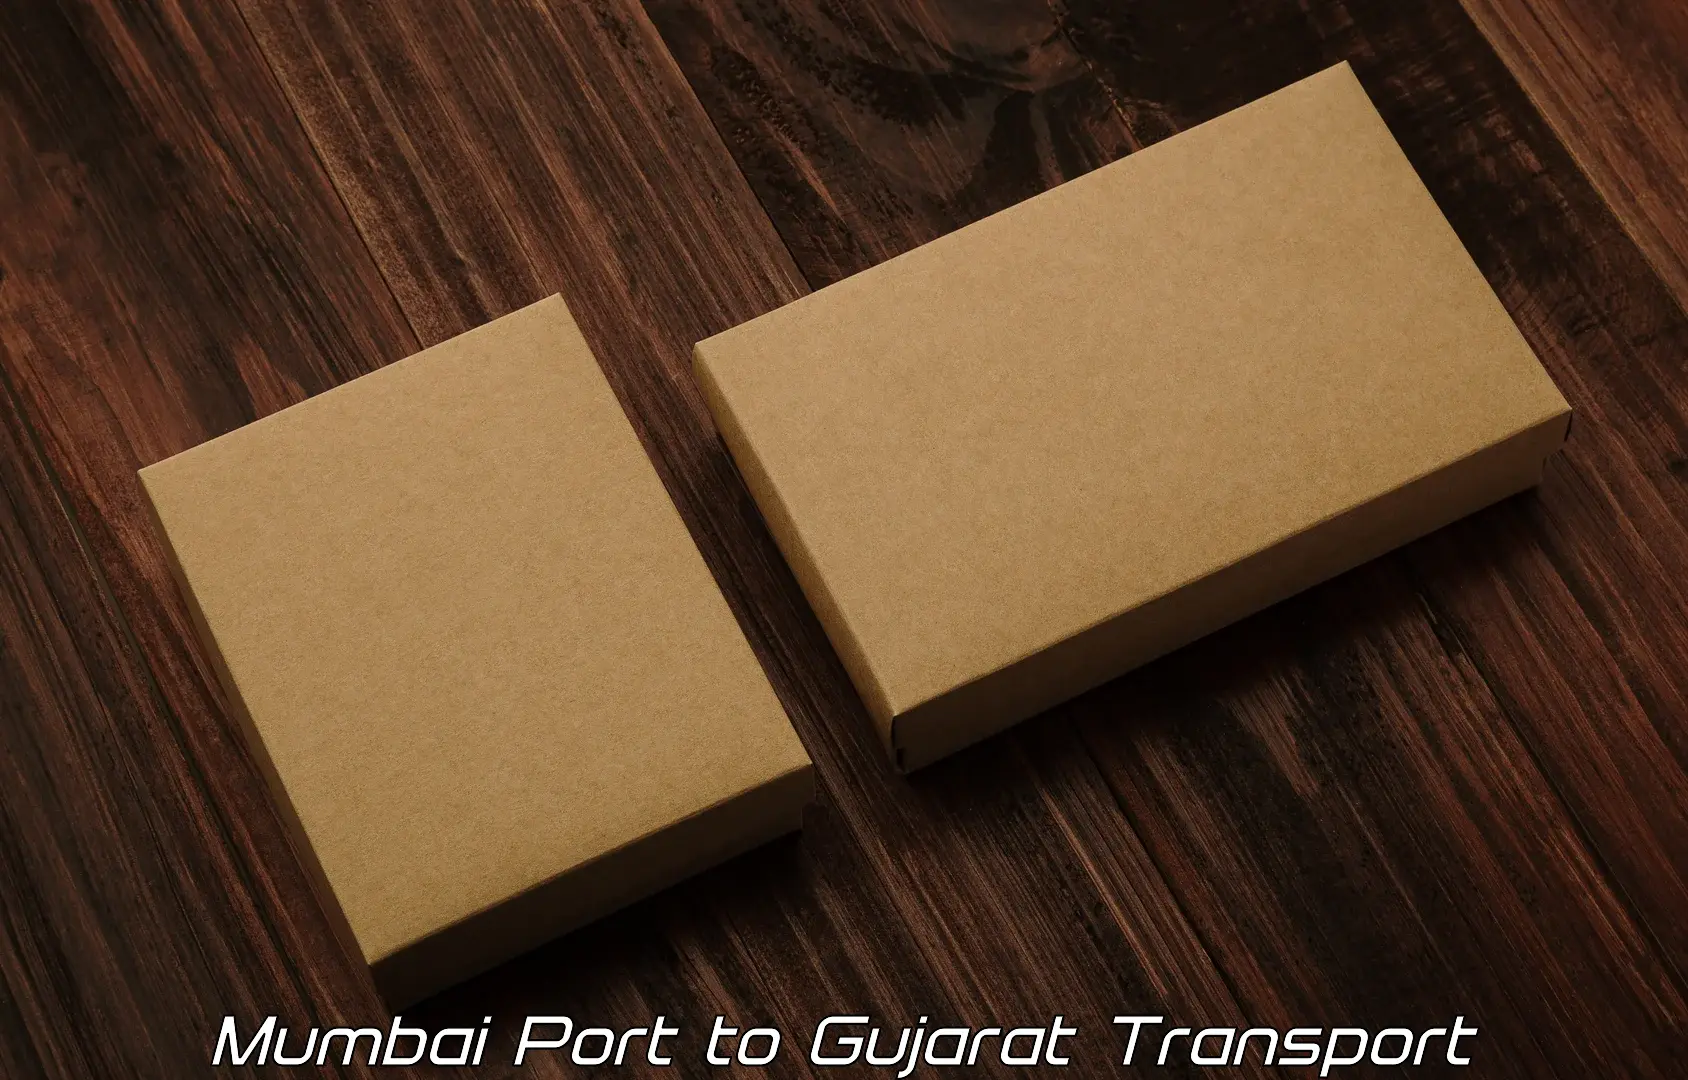 Transport in sharing Mumbai Port to GIDC